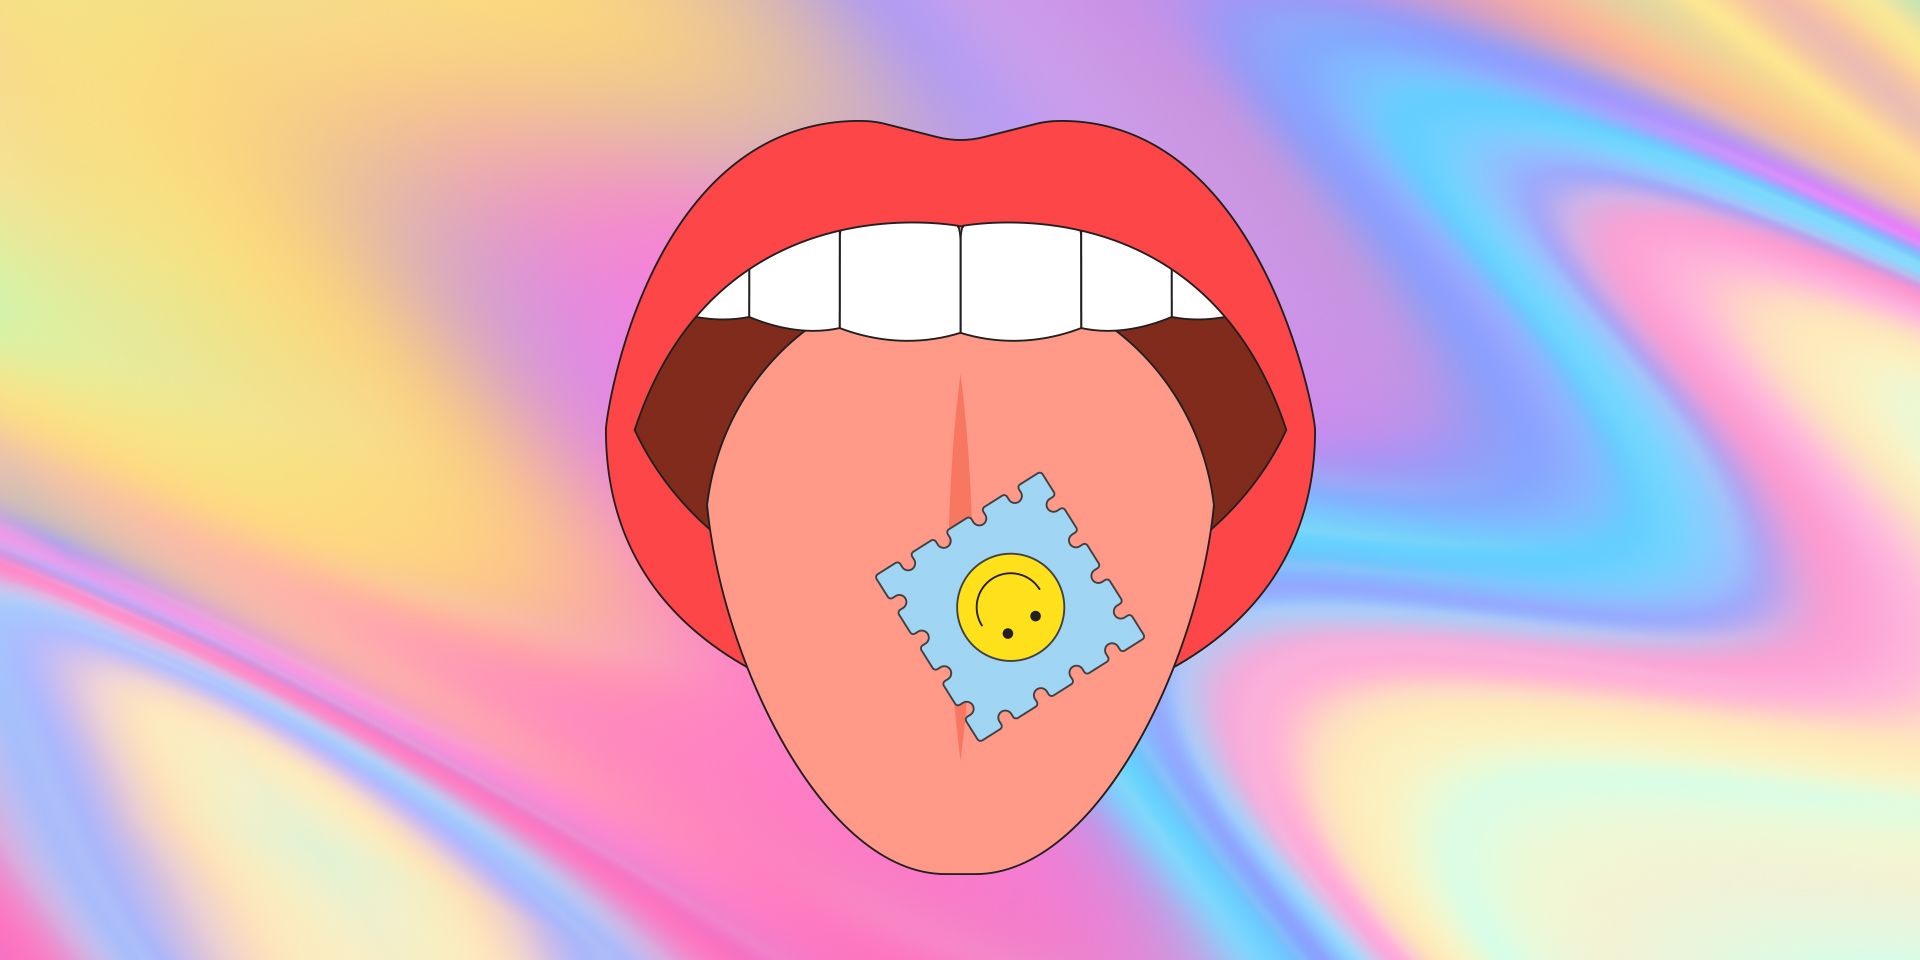 What Is Acid? - New Study Explains How LSD Makes Brains Trip